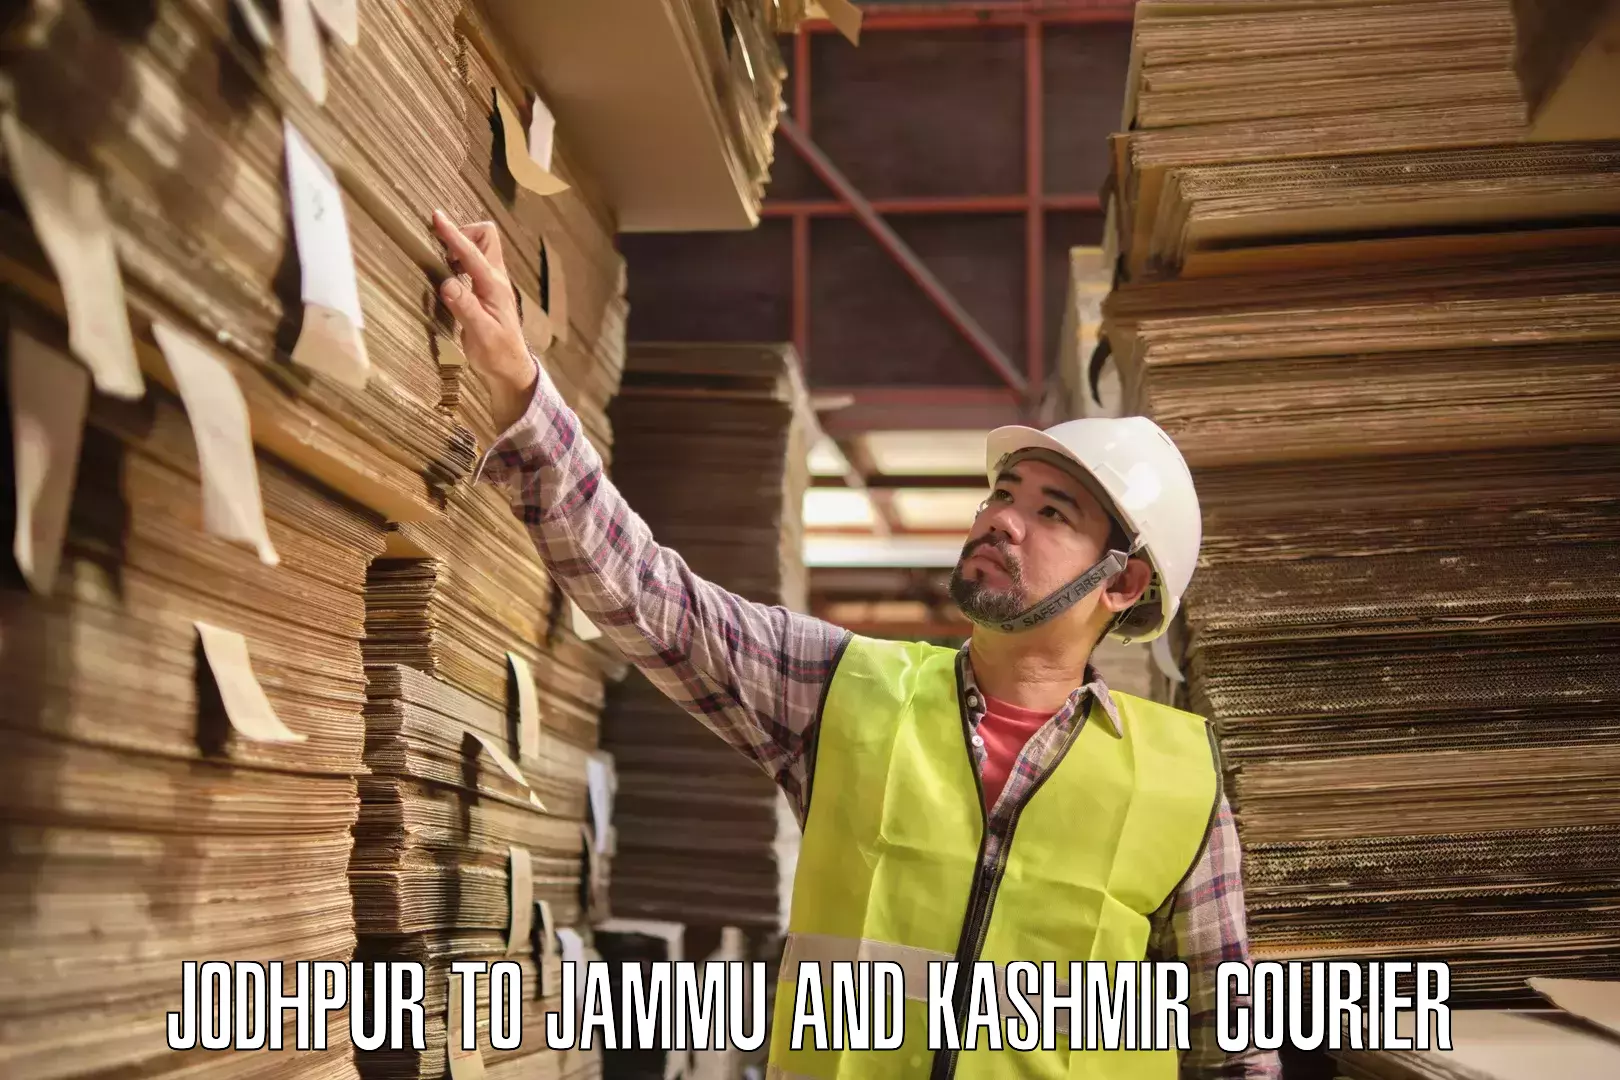 High-capacity parcel service Jodhpur to Jammu and Kashmir